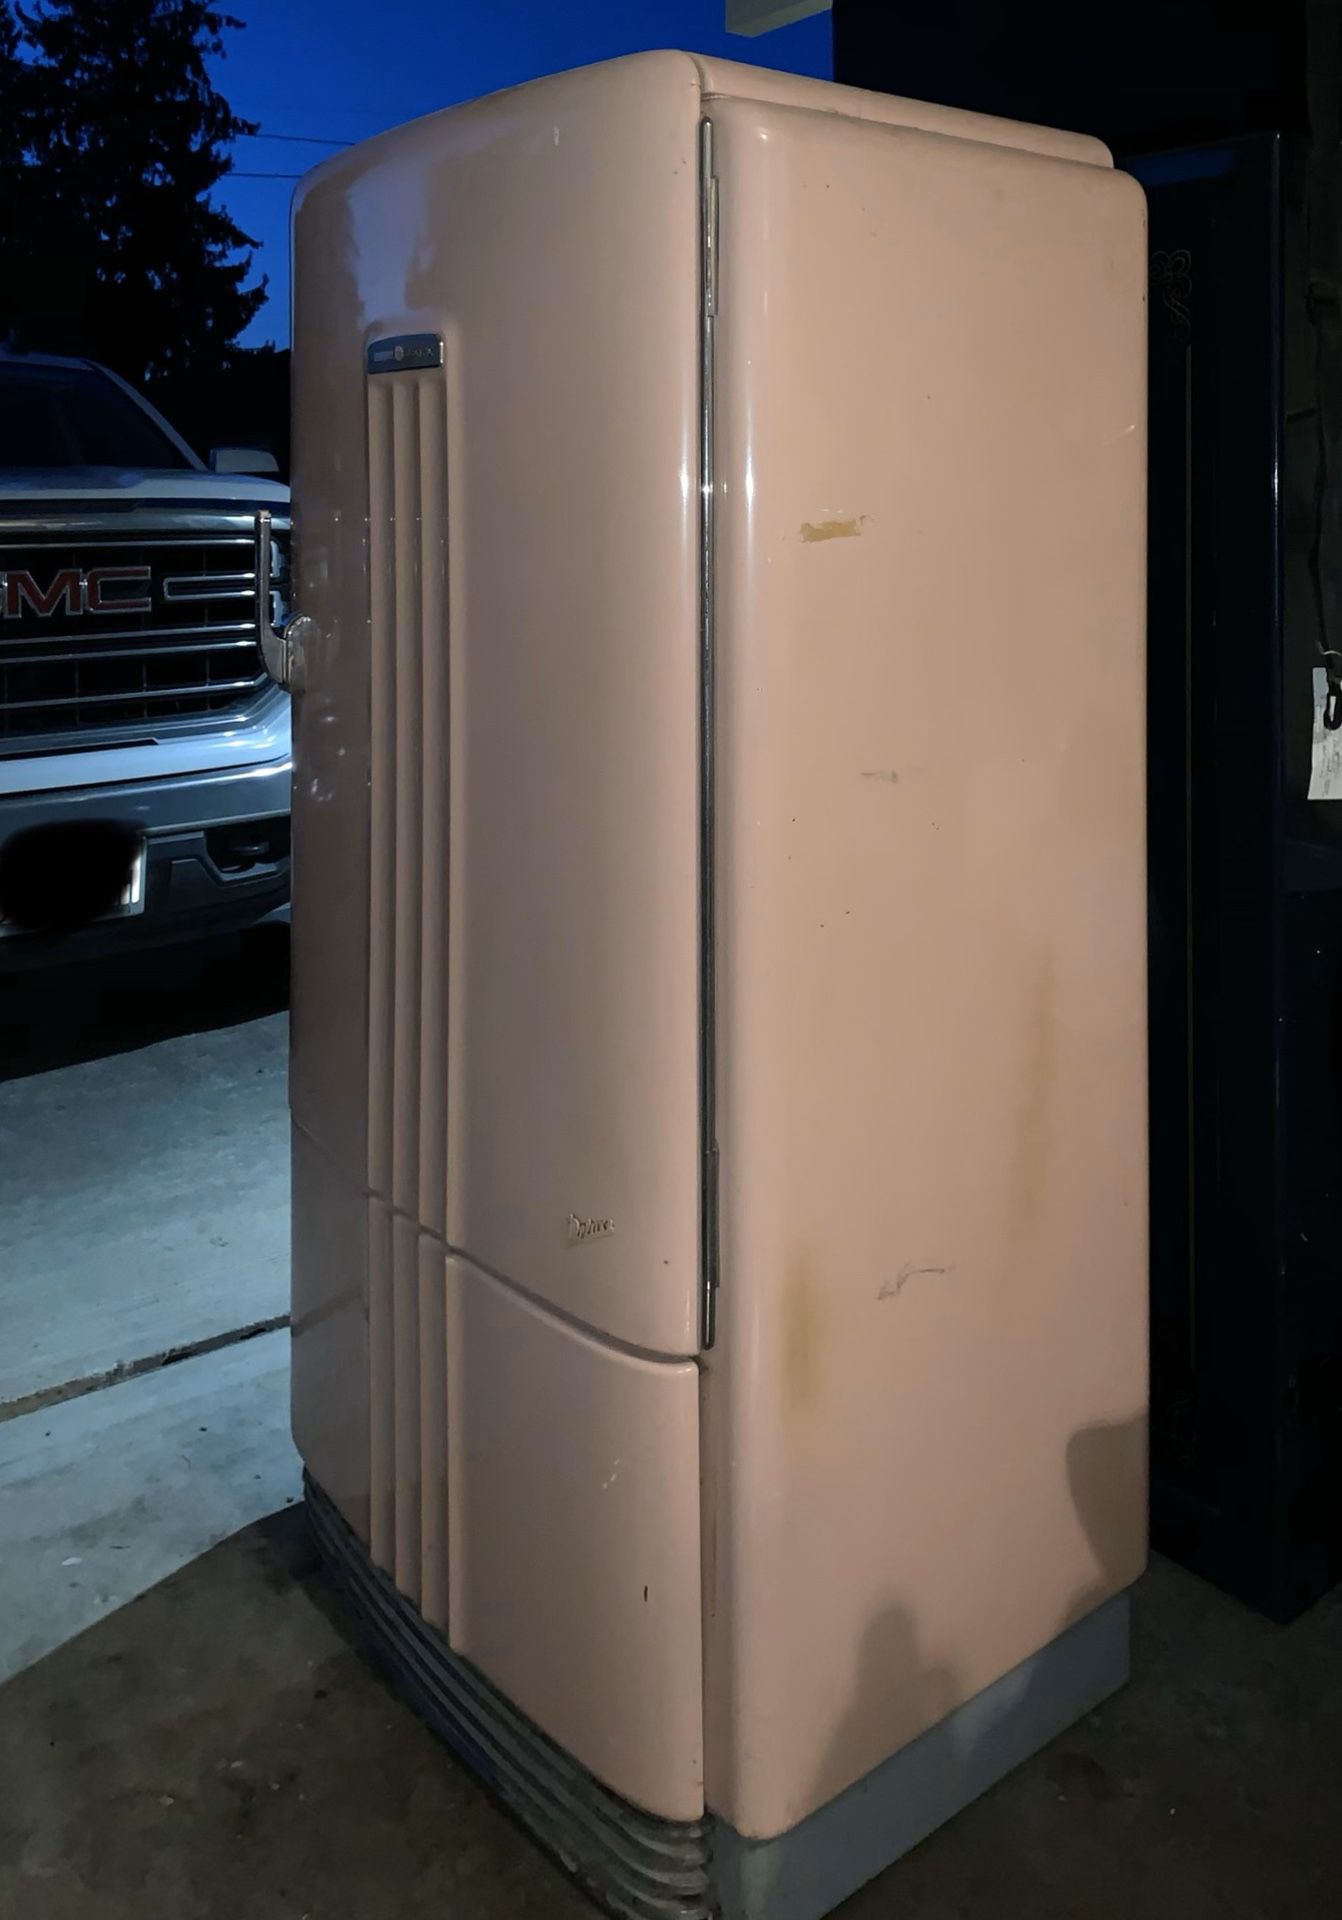 Old GE refrigerator